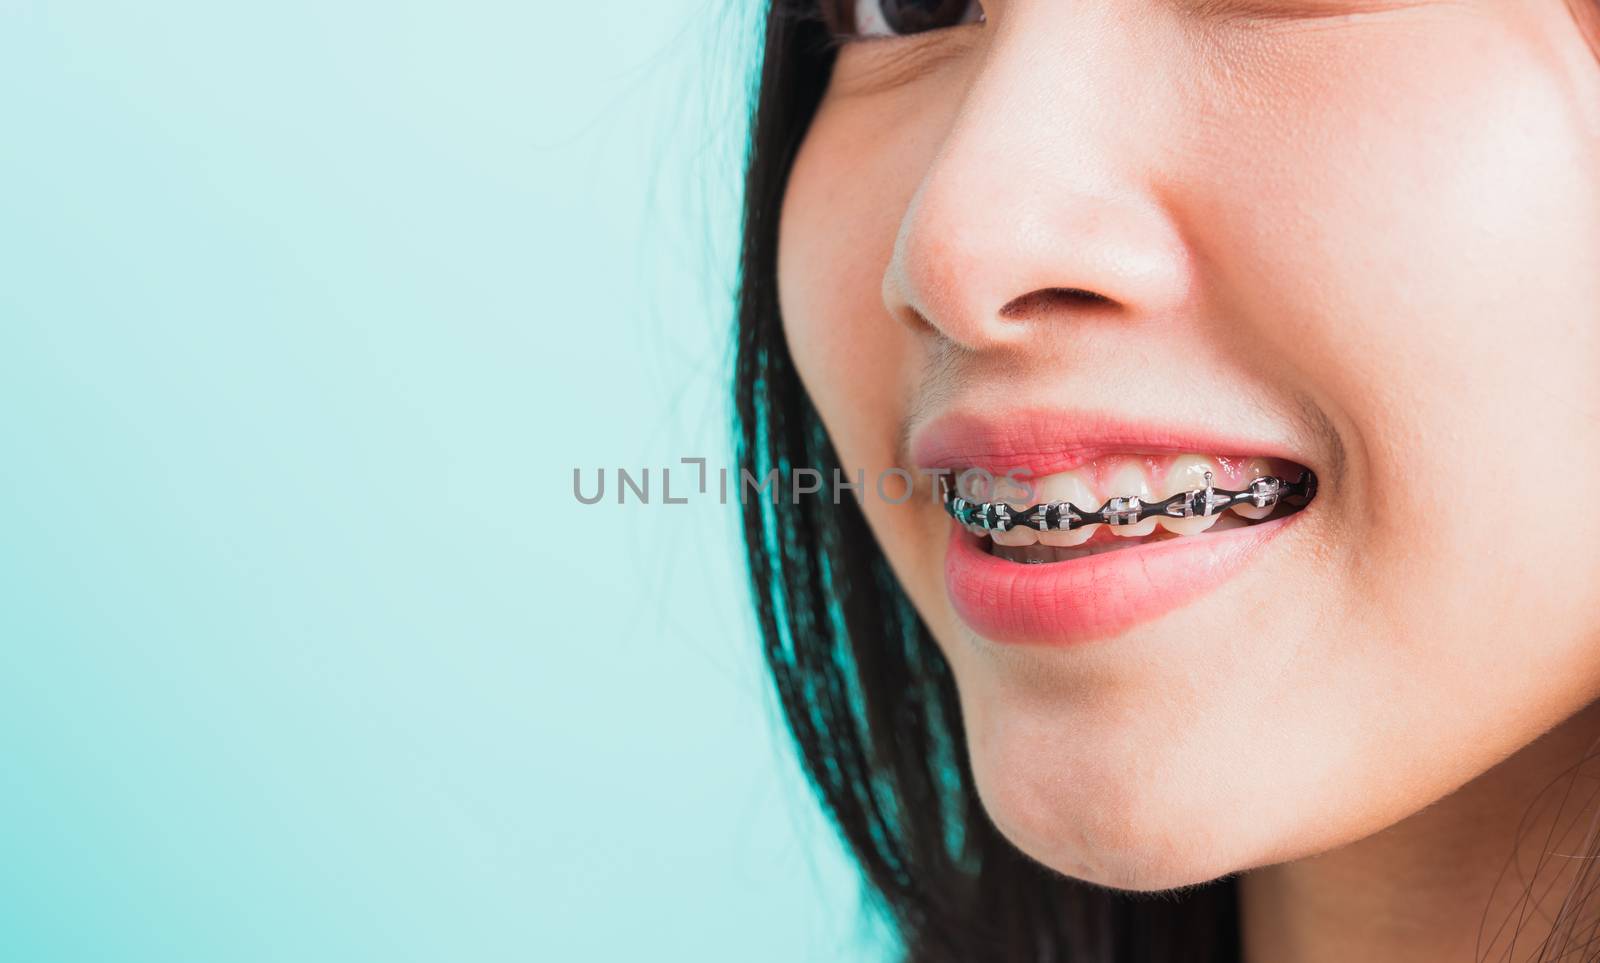 Wman smile have dental braces on teeth laughing by Sorapop